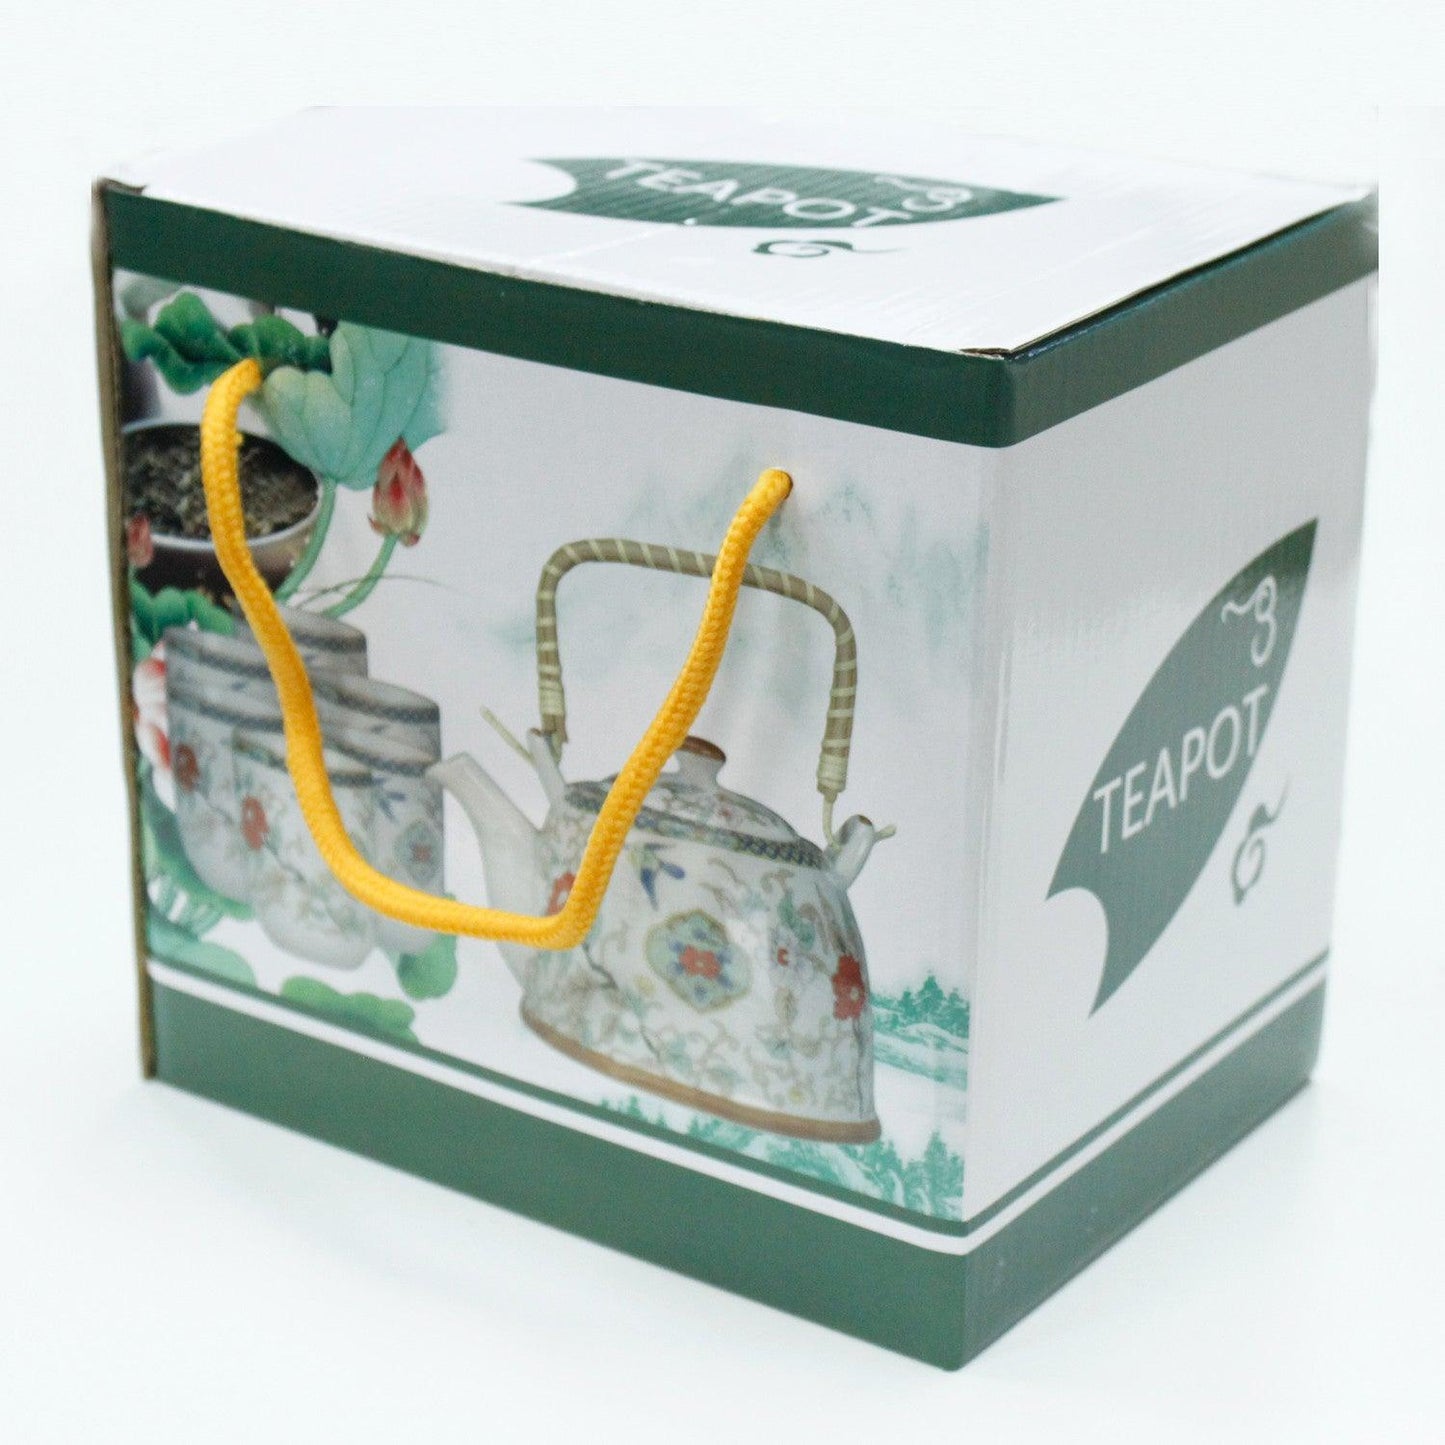 Herbal Teapot Set - White Stone Oriental - DuvetDay.co.uk